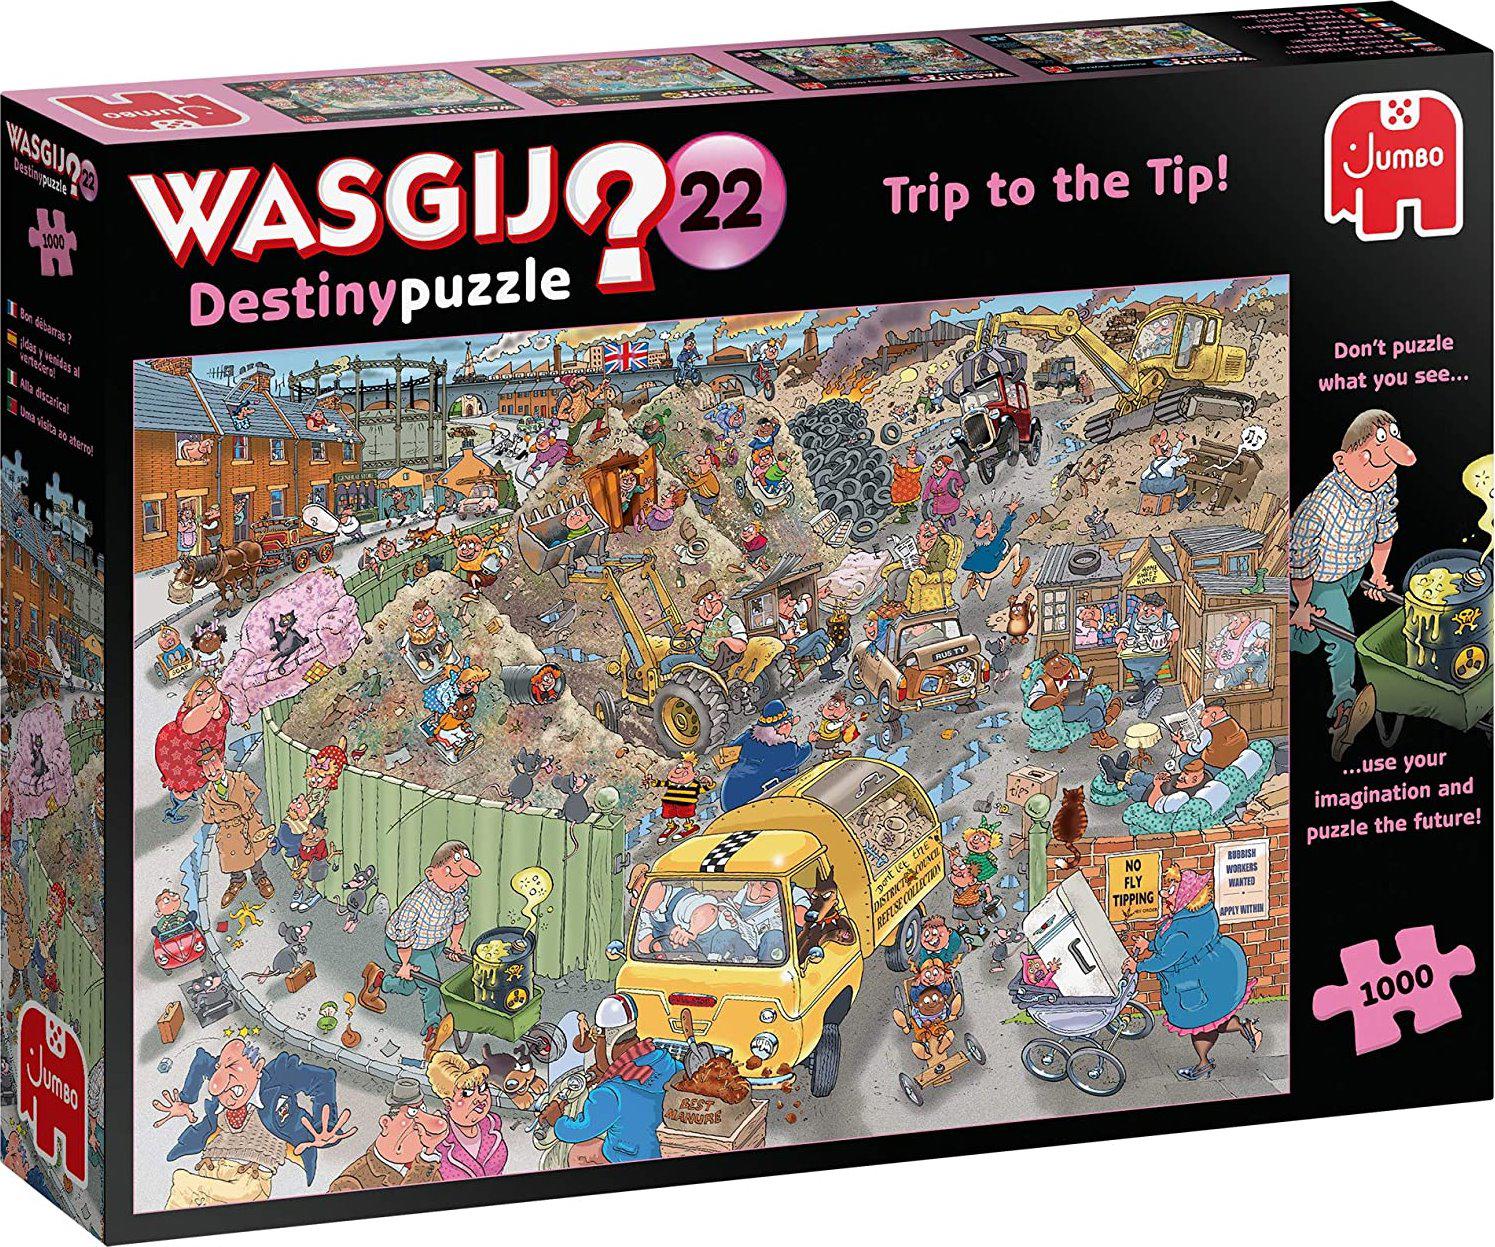 Puzzle Wasgij: Destiny Puzzle 22: Obchod s hračkami!